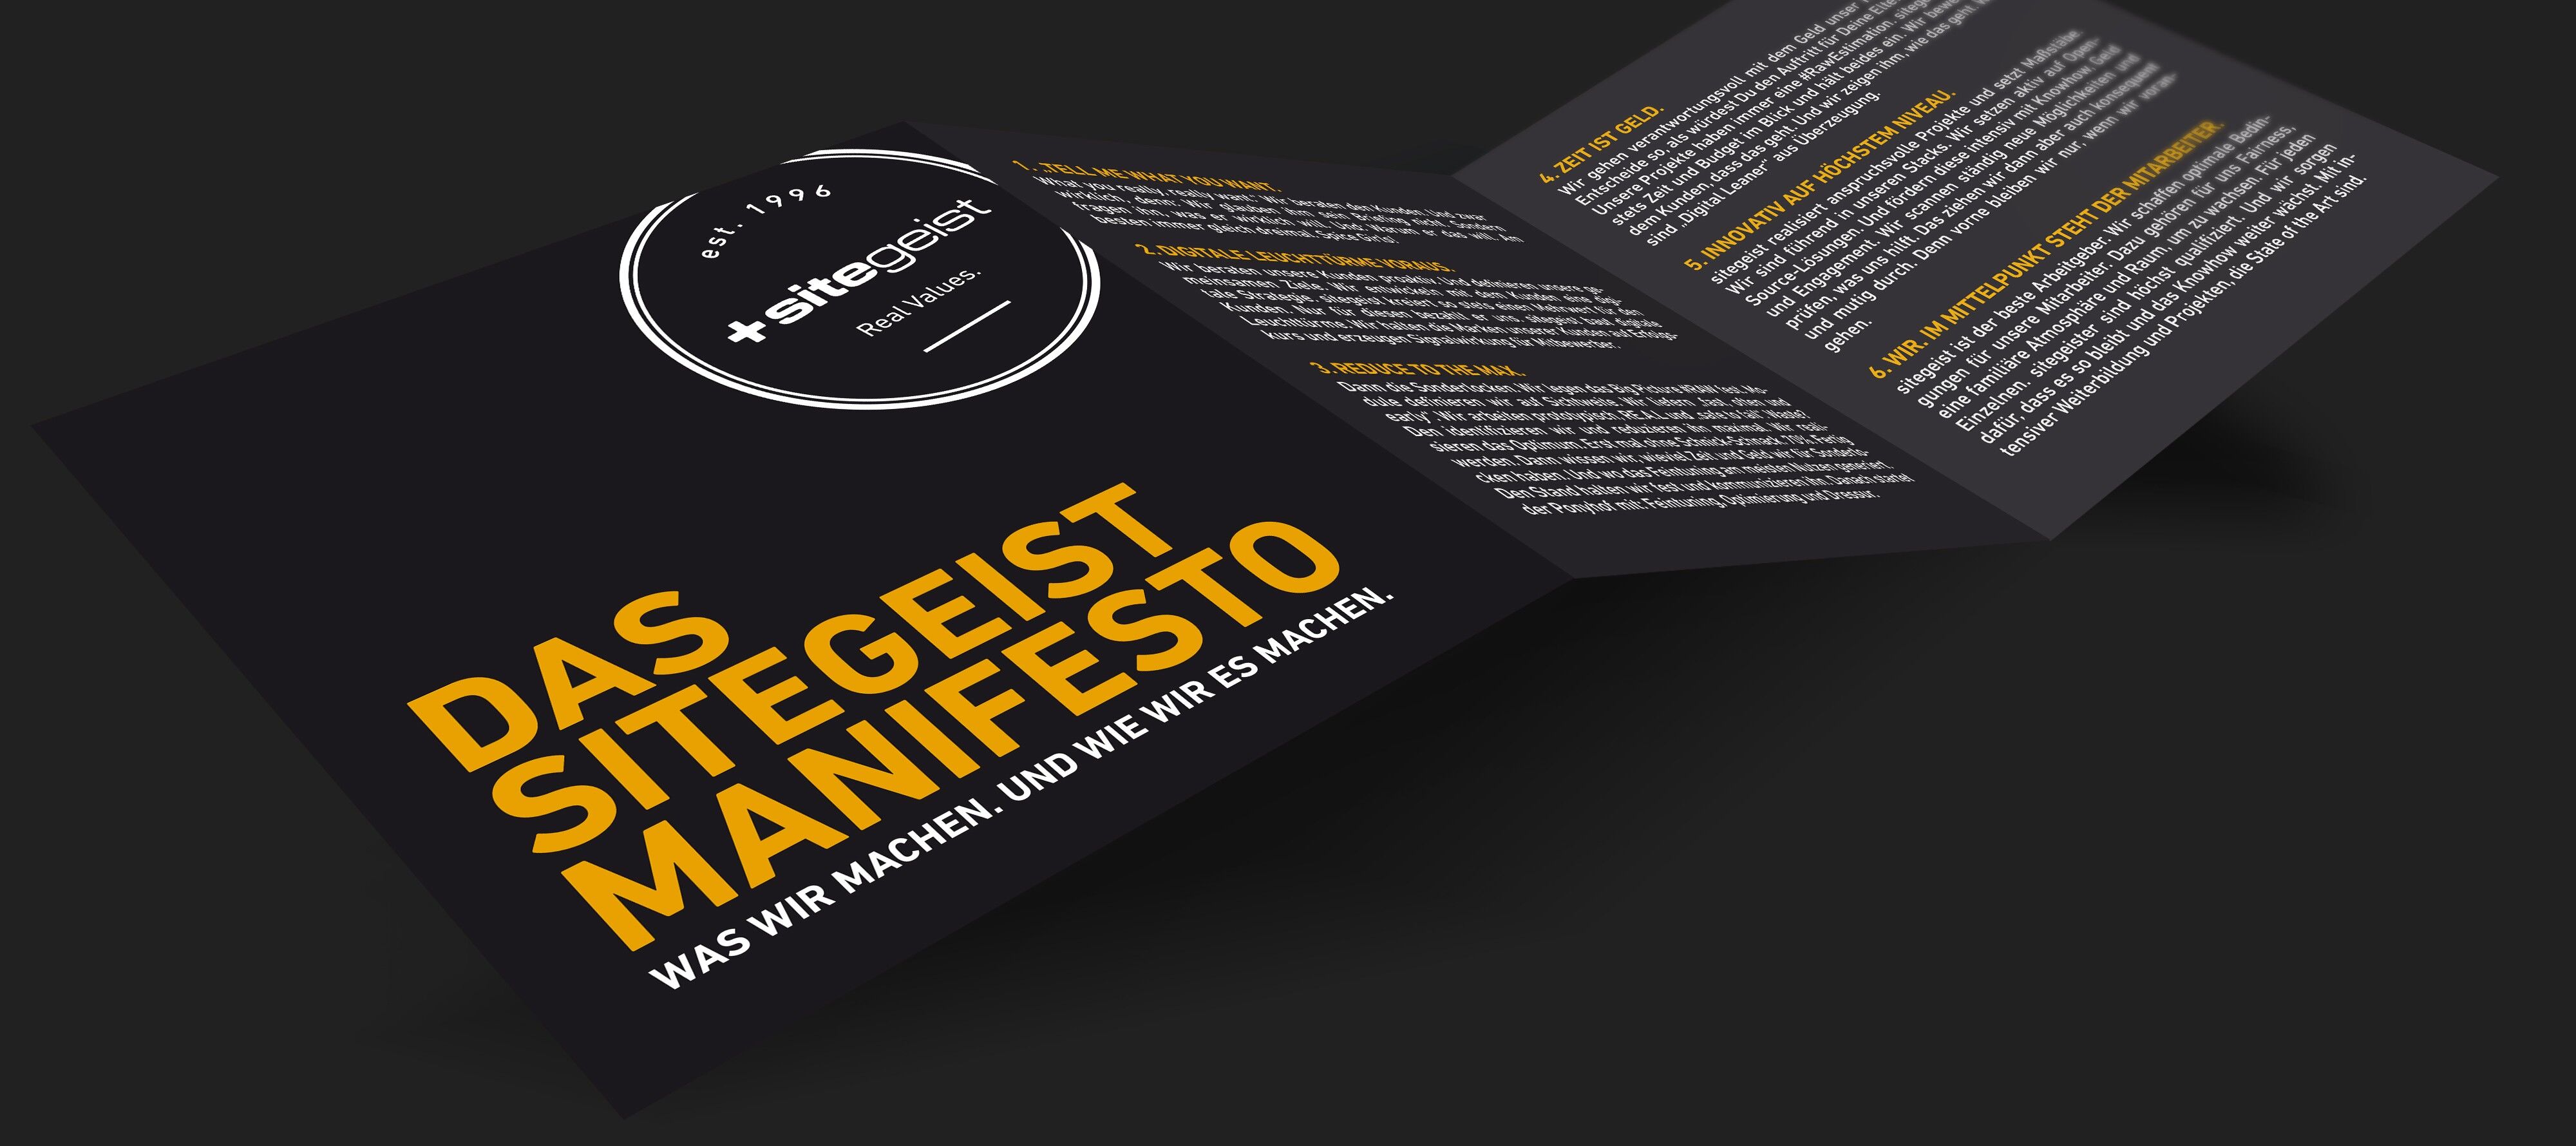 sitegeist real Manifesto Broschüre